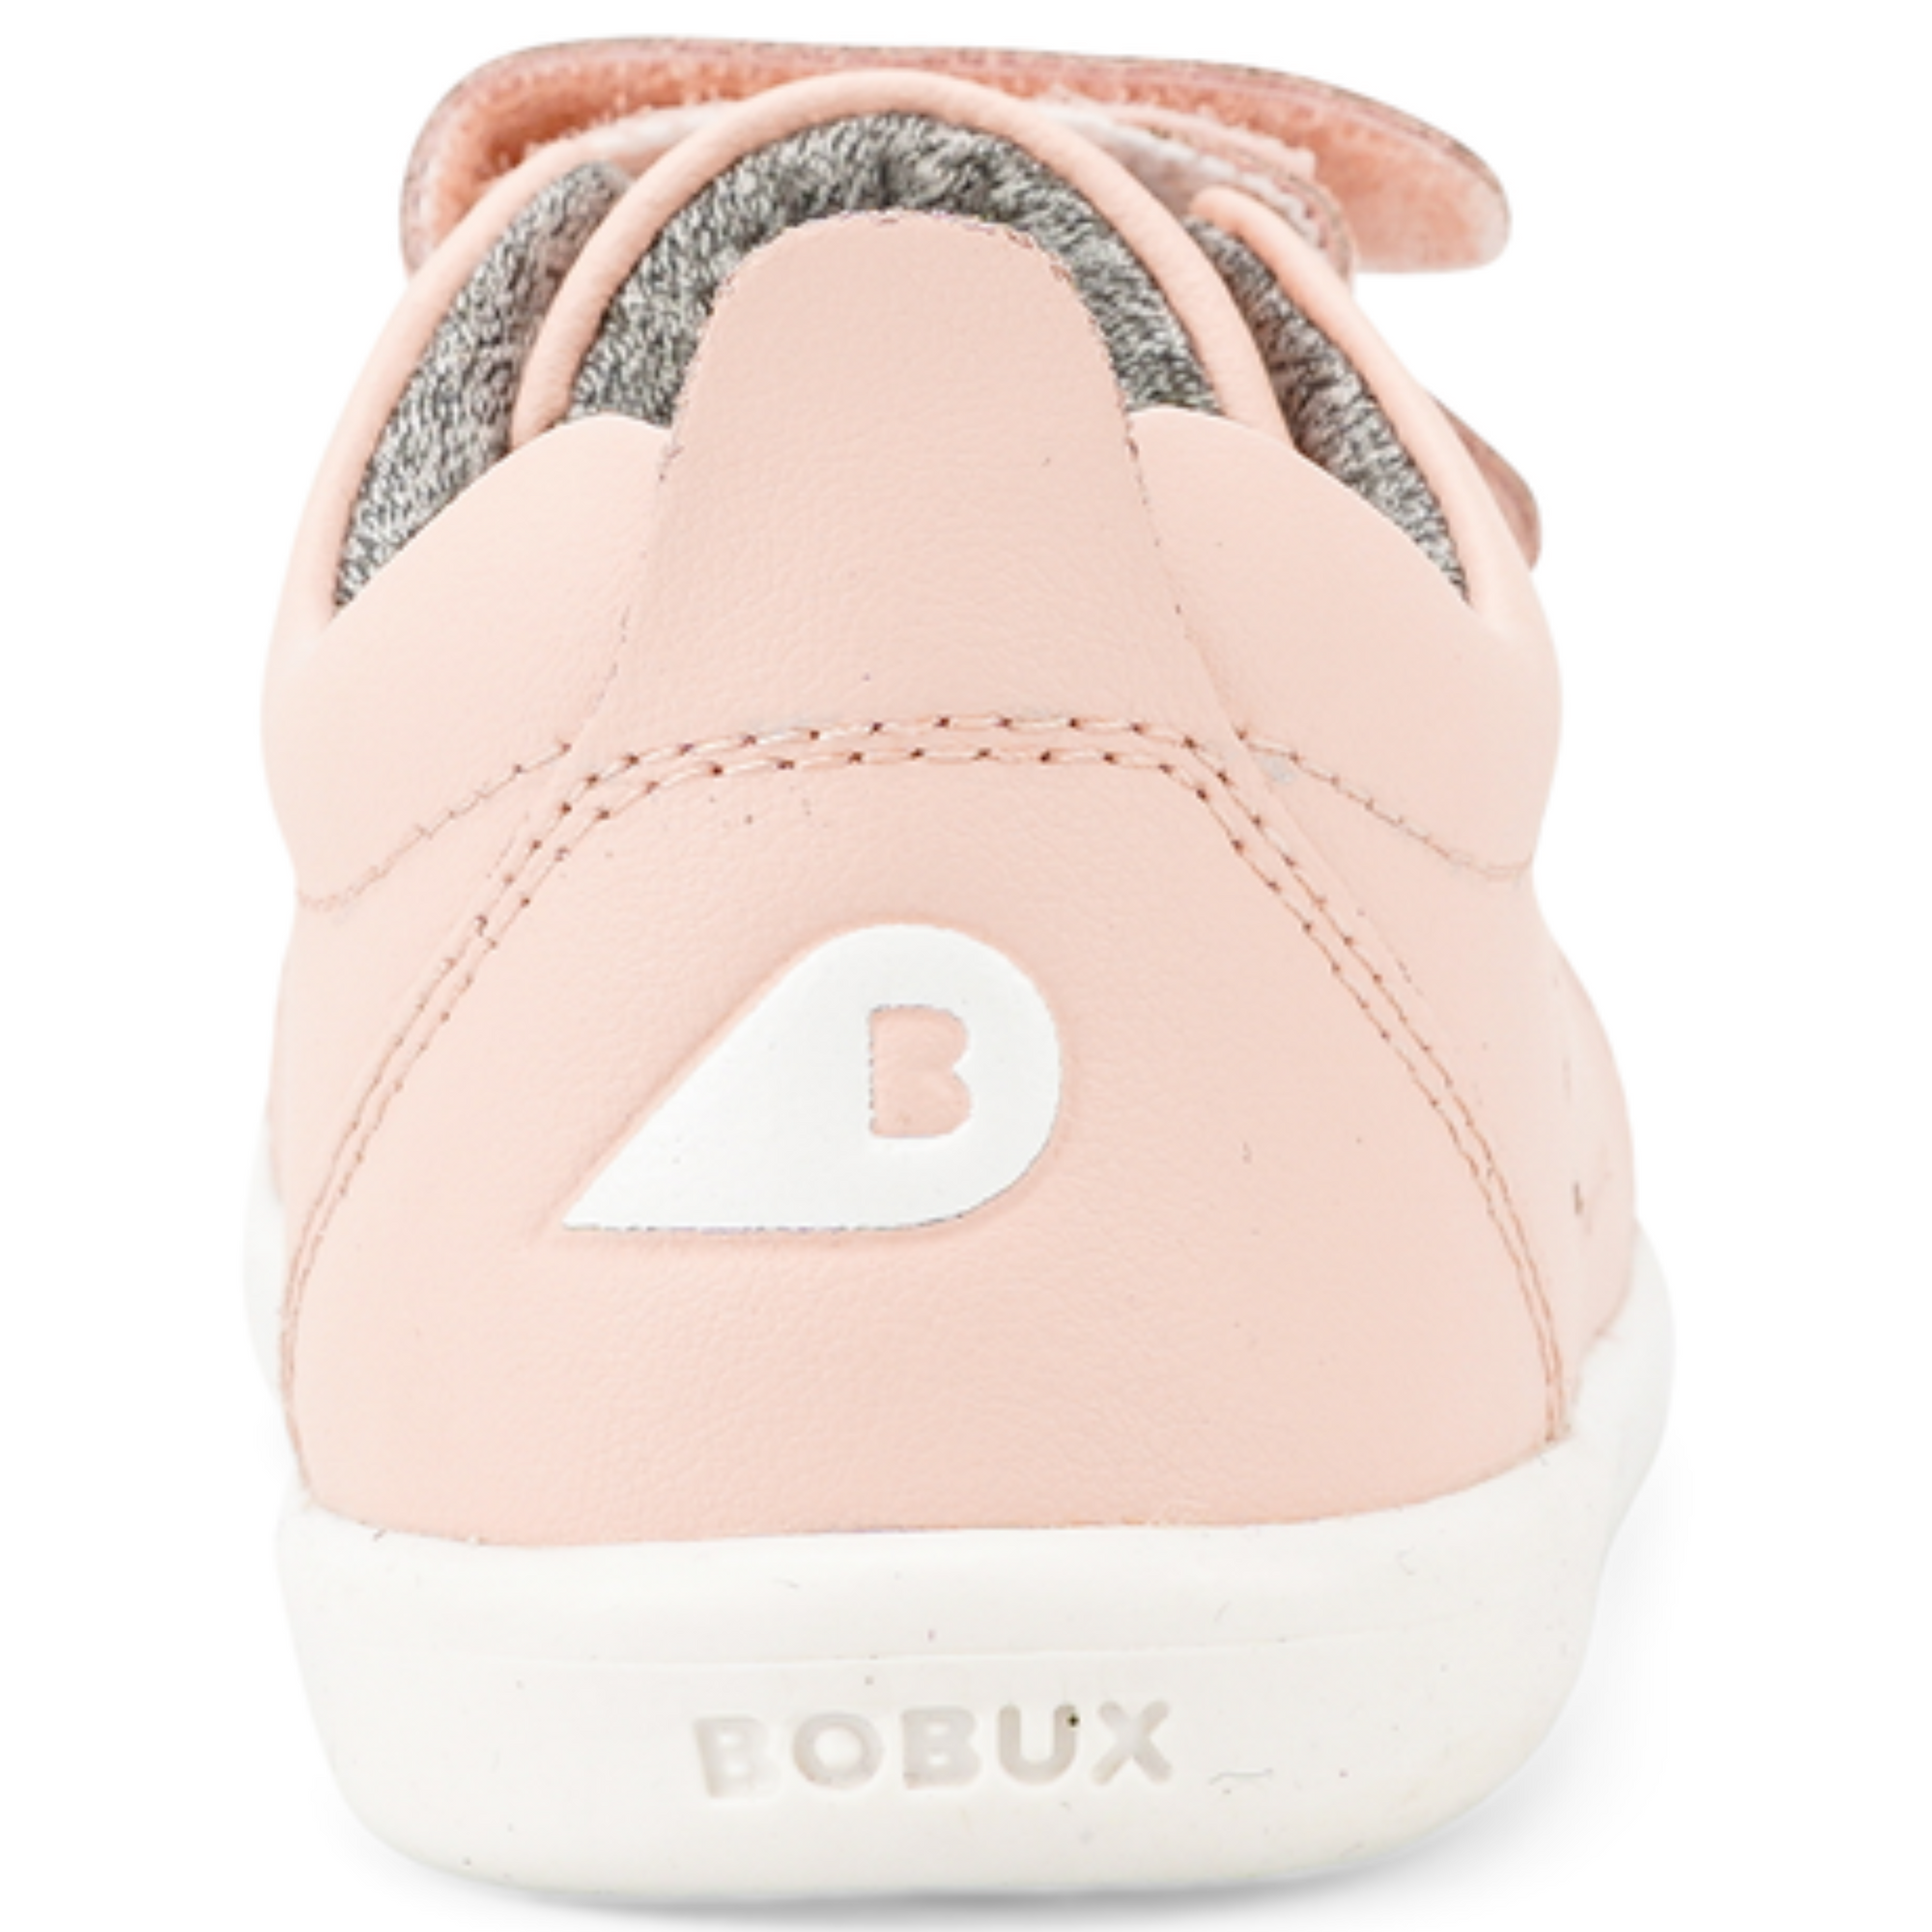 Bobux Seashell Grass Court Switch Shoes i-Walk